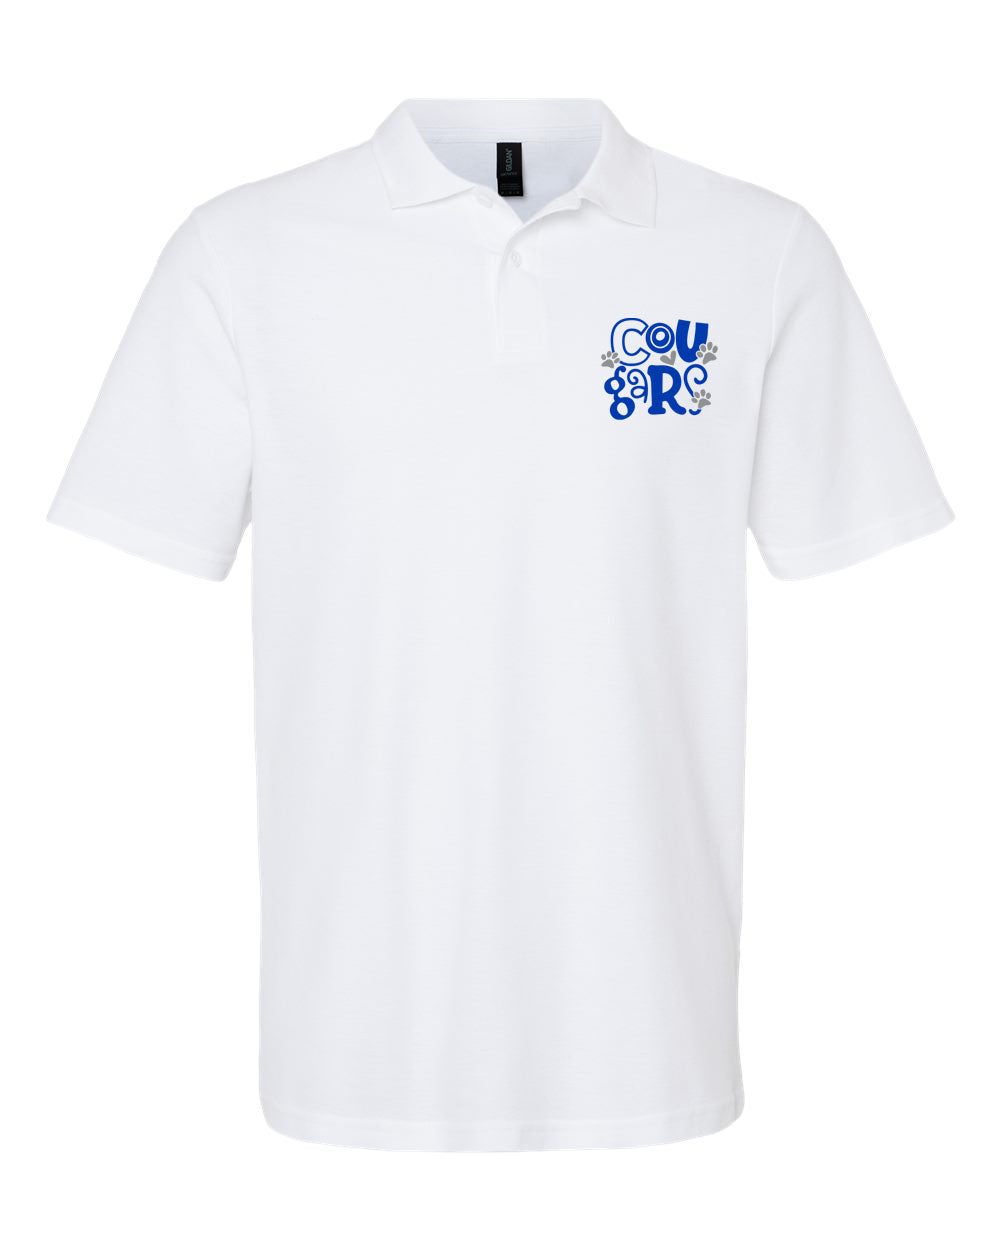 Stillwater School Design 18 Polo T-Shirt